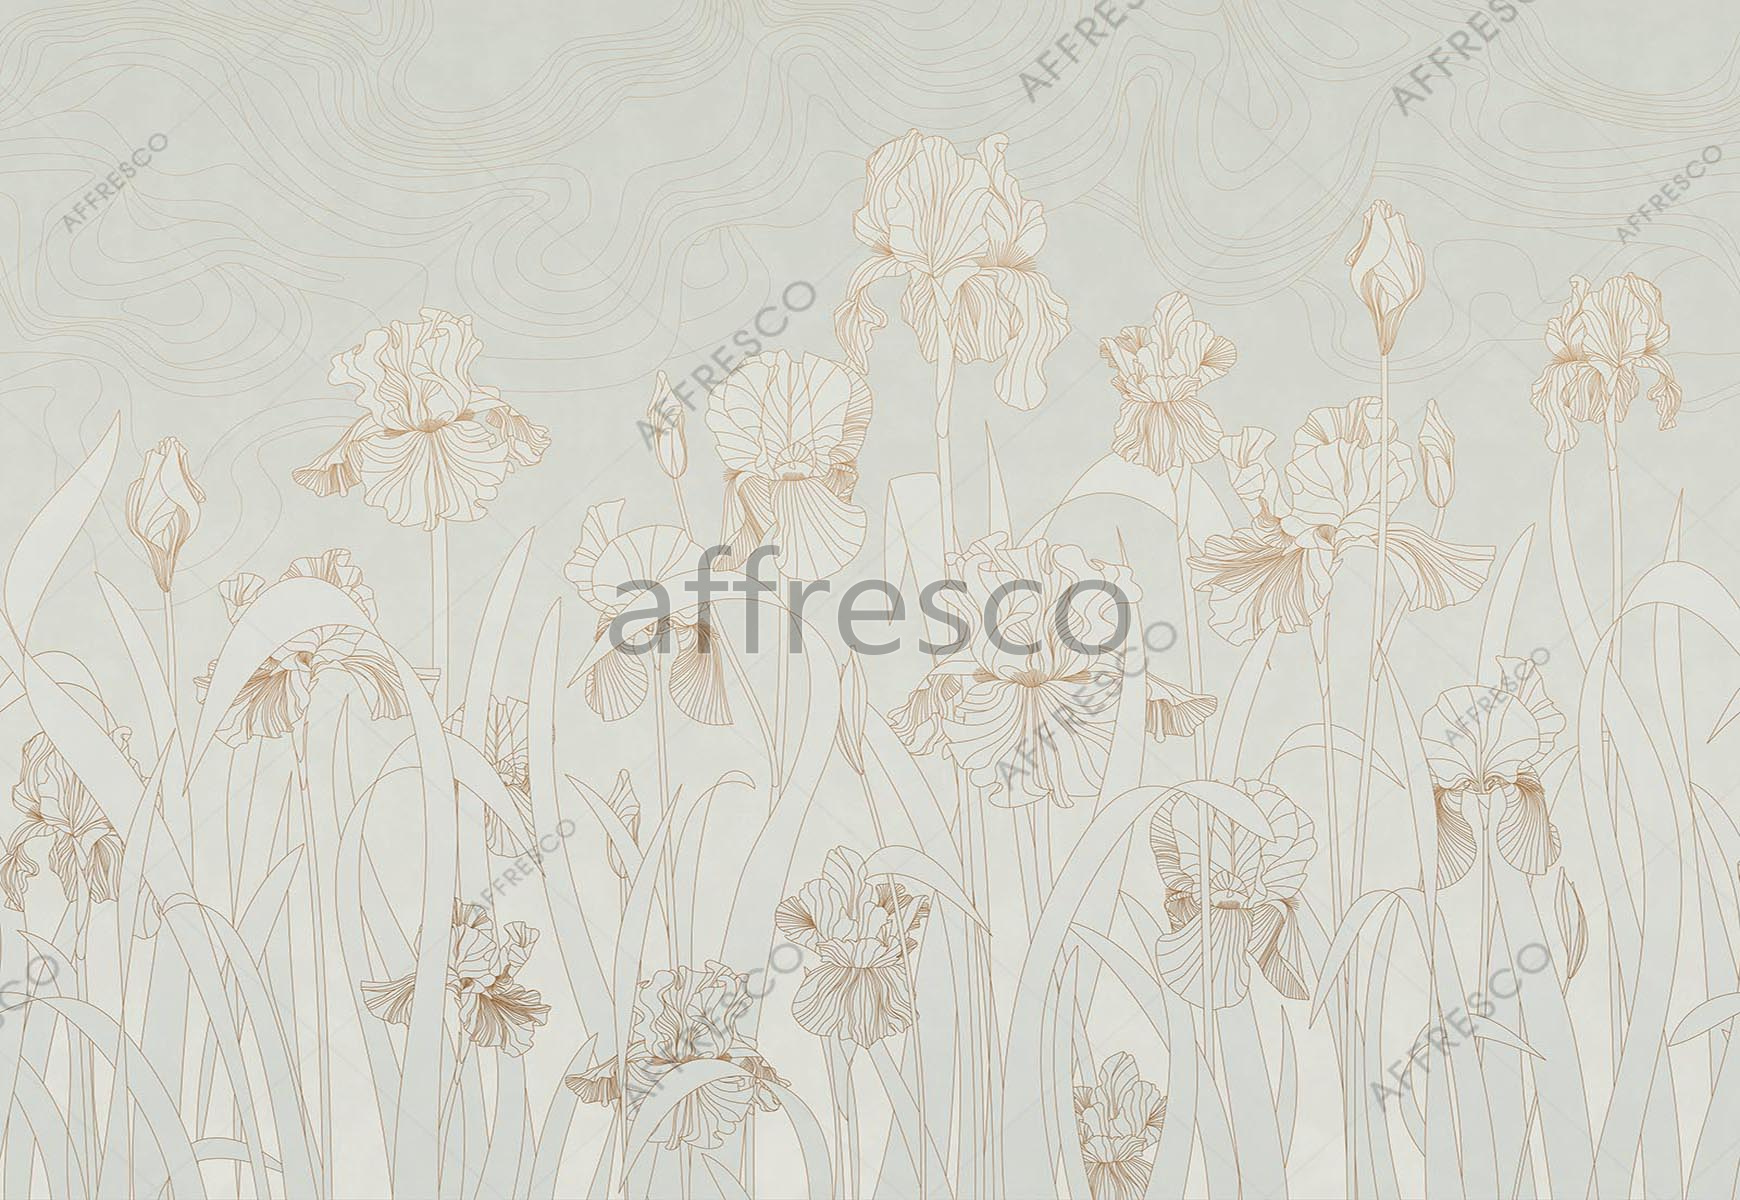 ID139177 | Flowers | graphic irises | Affresco Factory